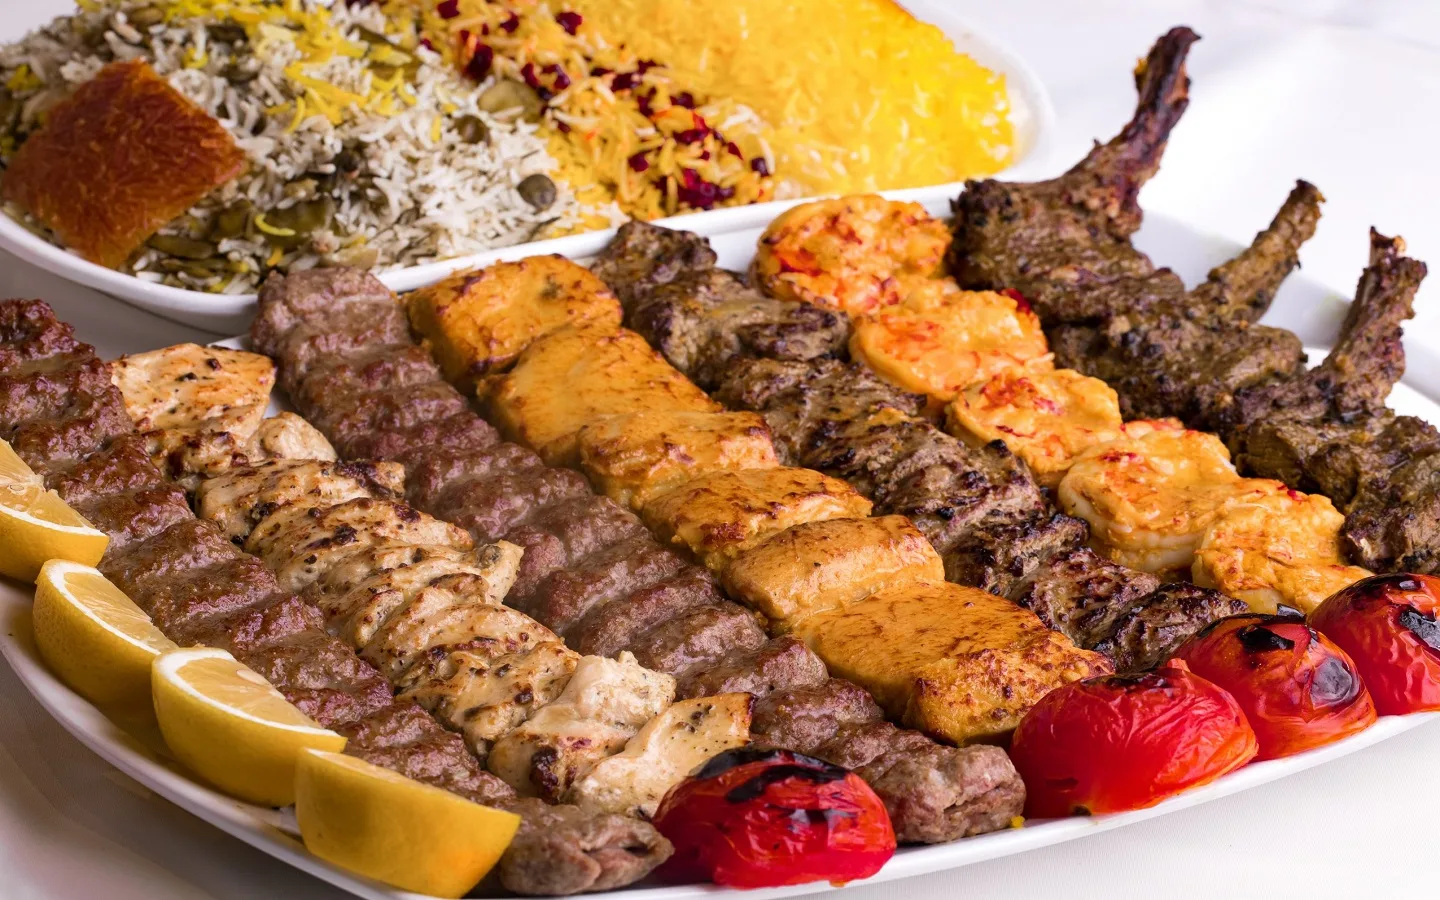 Best Iranian Restaurants in Dubai 